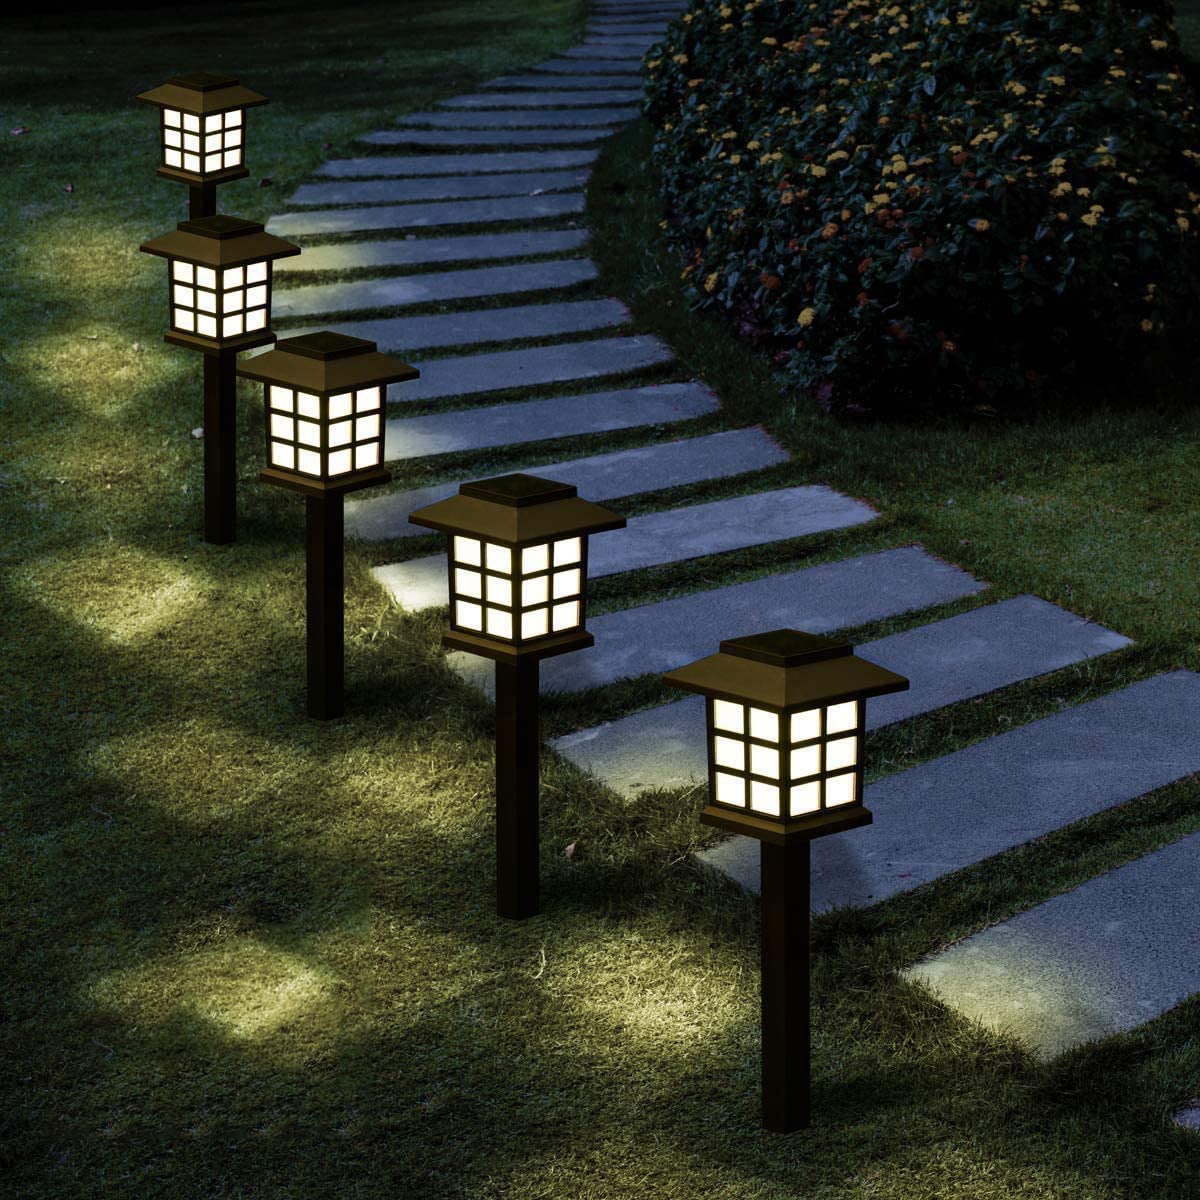 Solar Power LED Light Stand Garden Lawn Landscape Yard Outdoor Animal Decor Lamp 